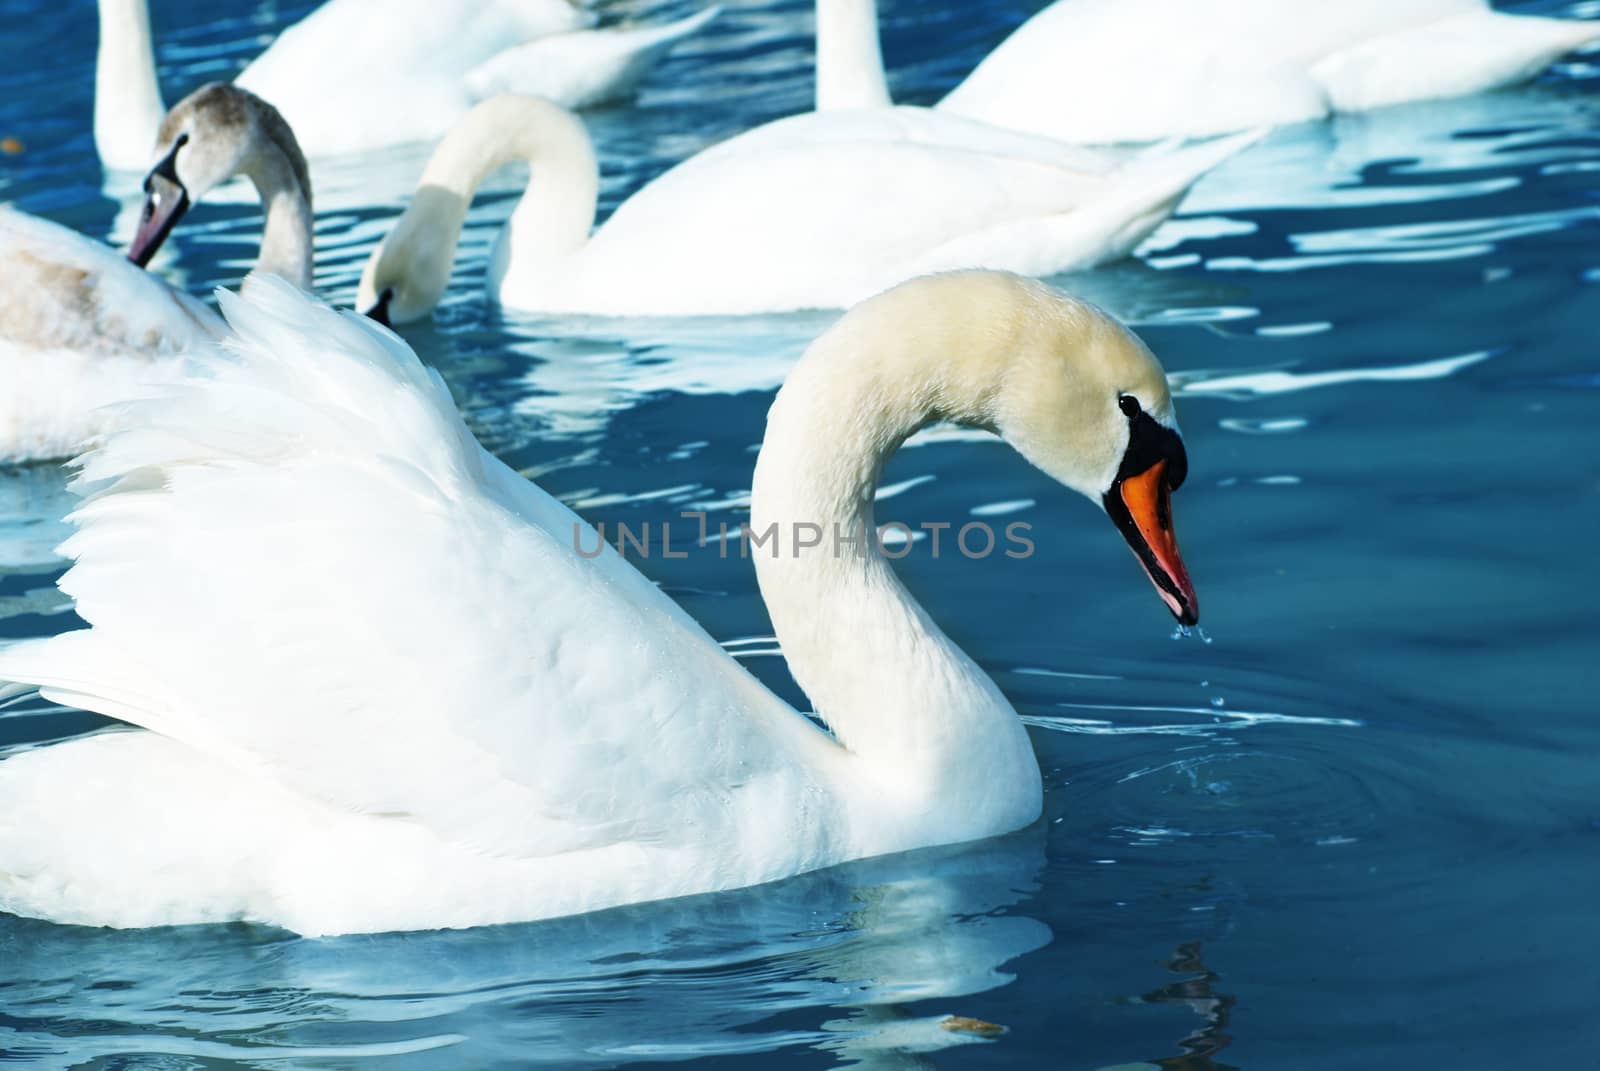 White swans on the lake by vapi